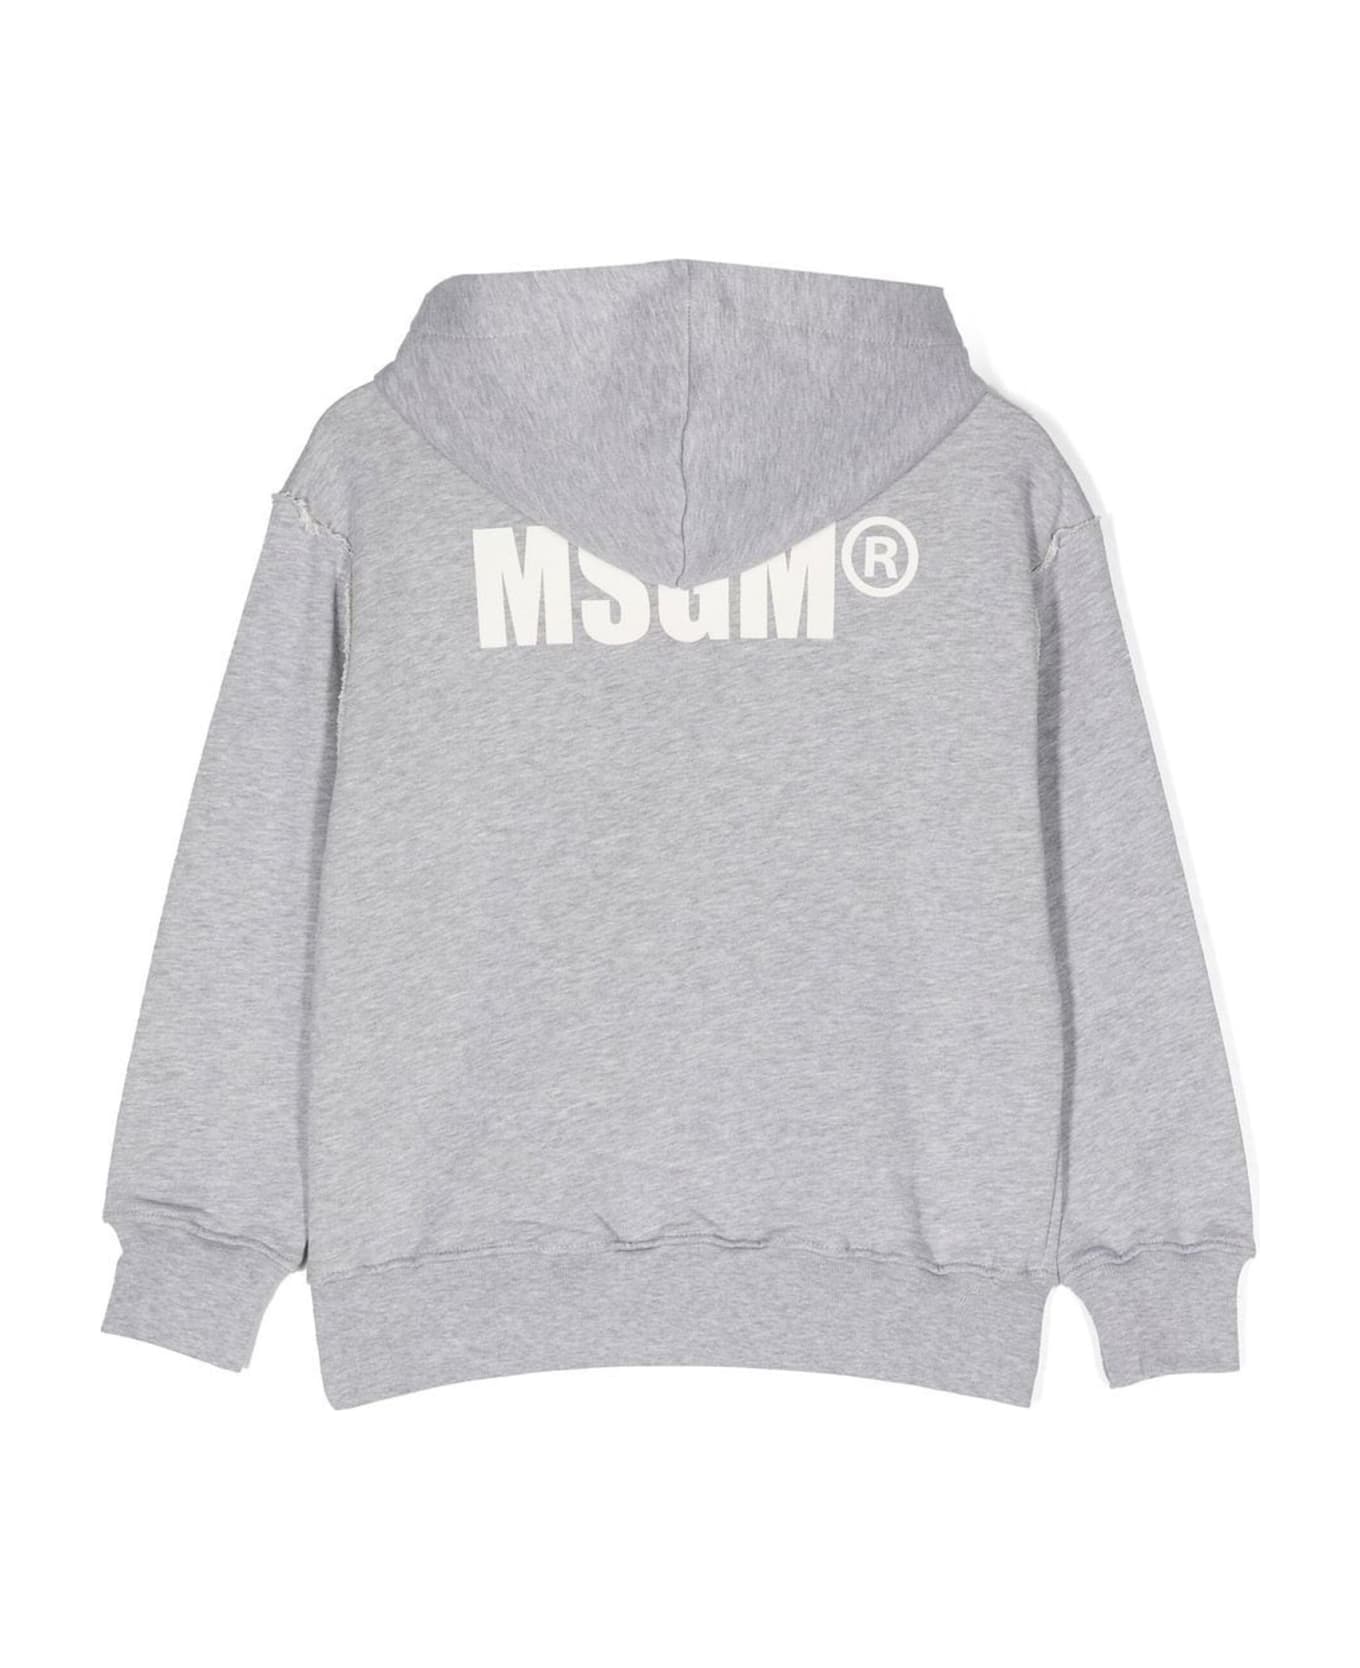 MSGM Grey Cotton Sweatshirt - Grigio